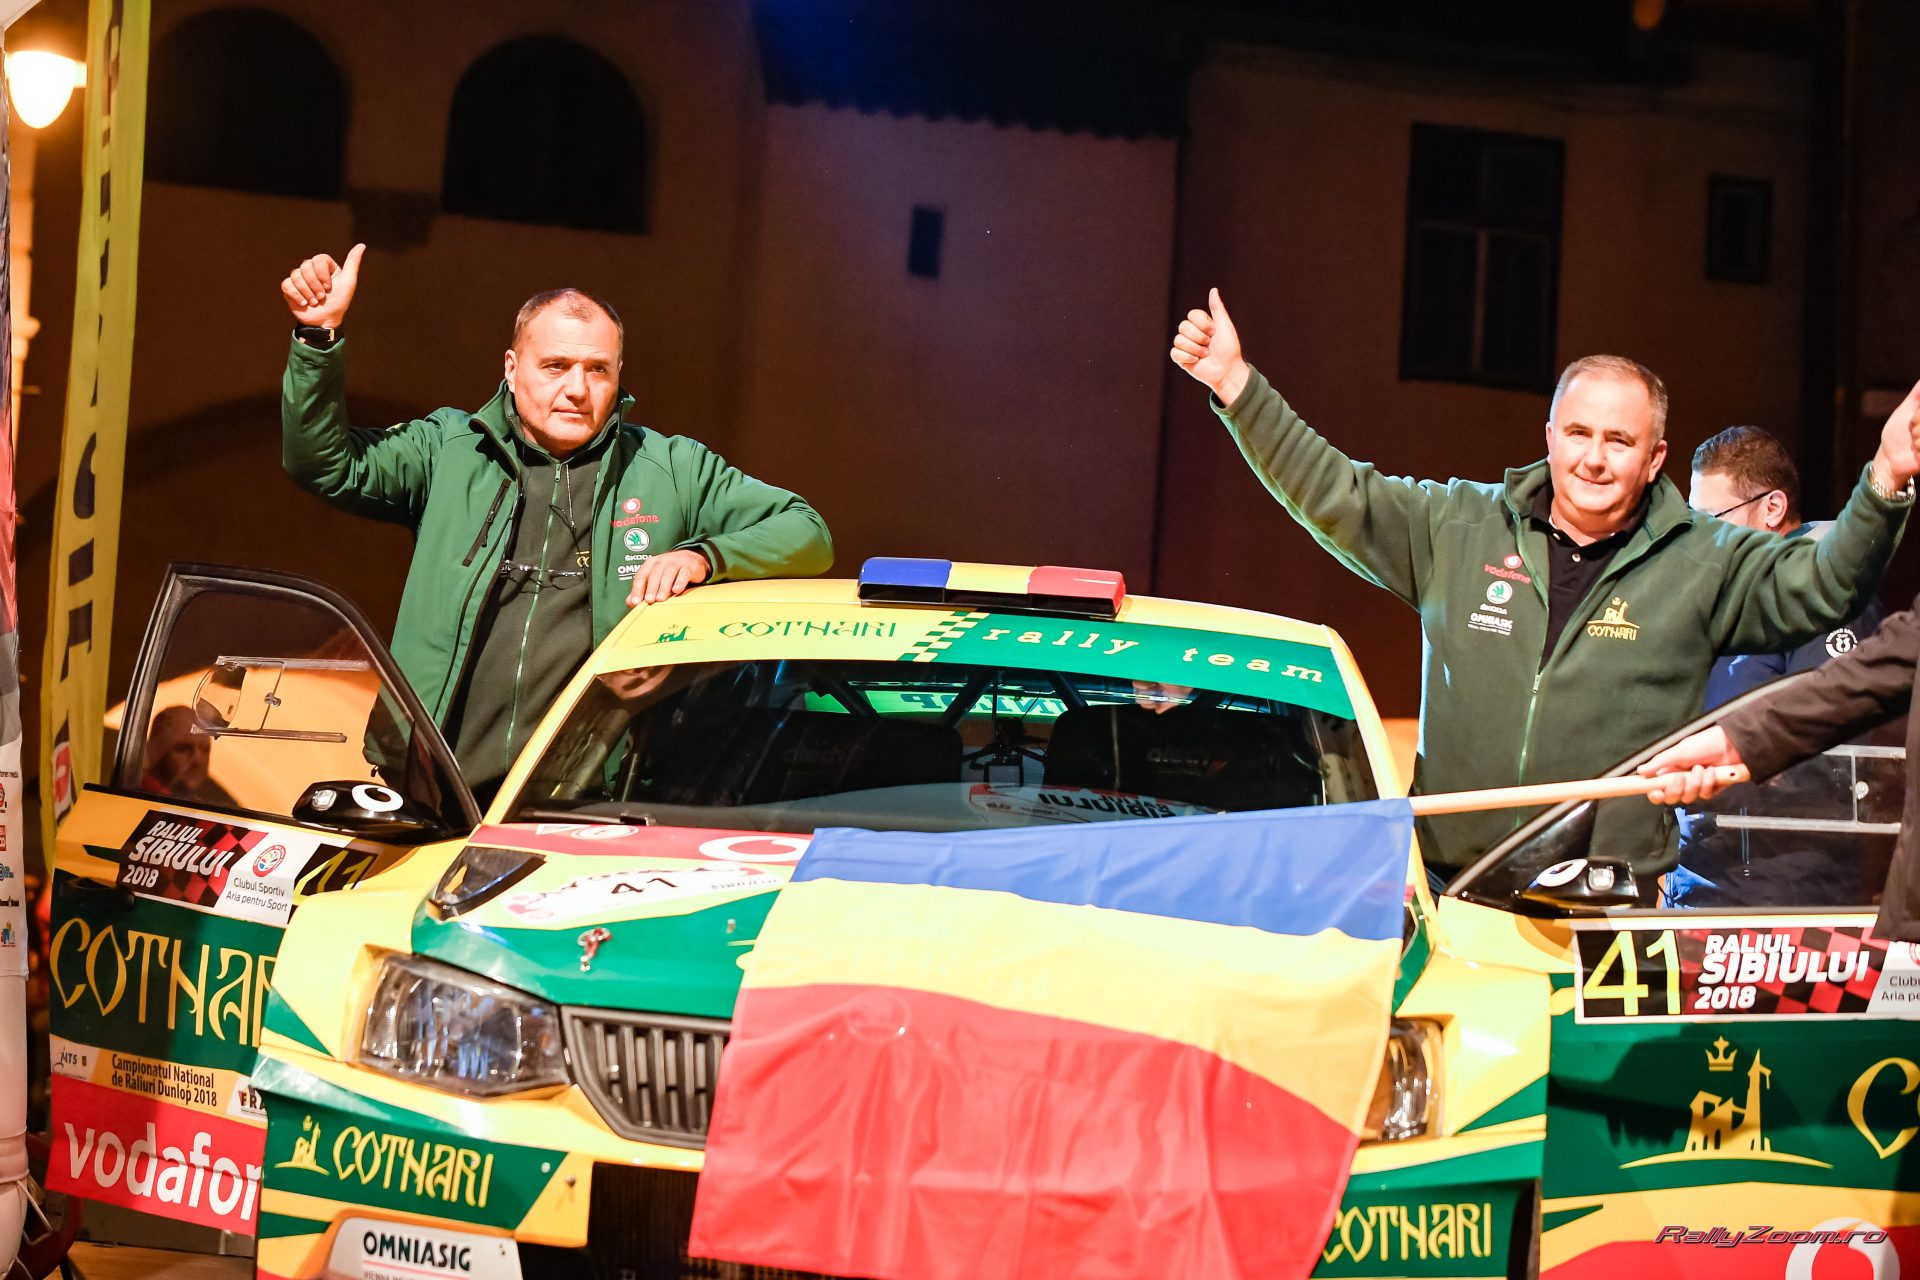 Echipajul Cotnari Rally Team si-a luat la revedere de la fani